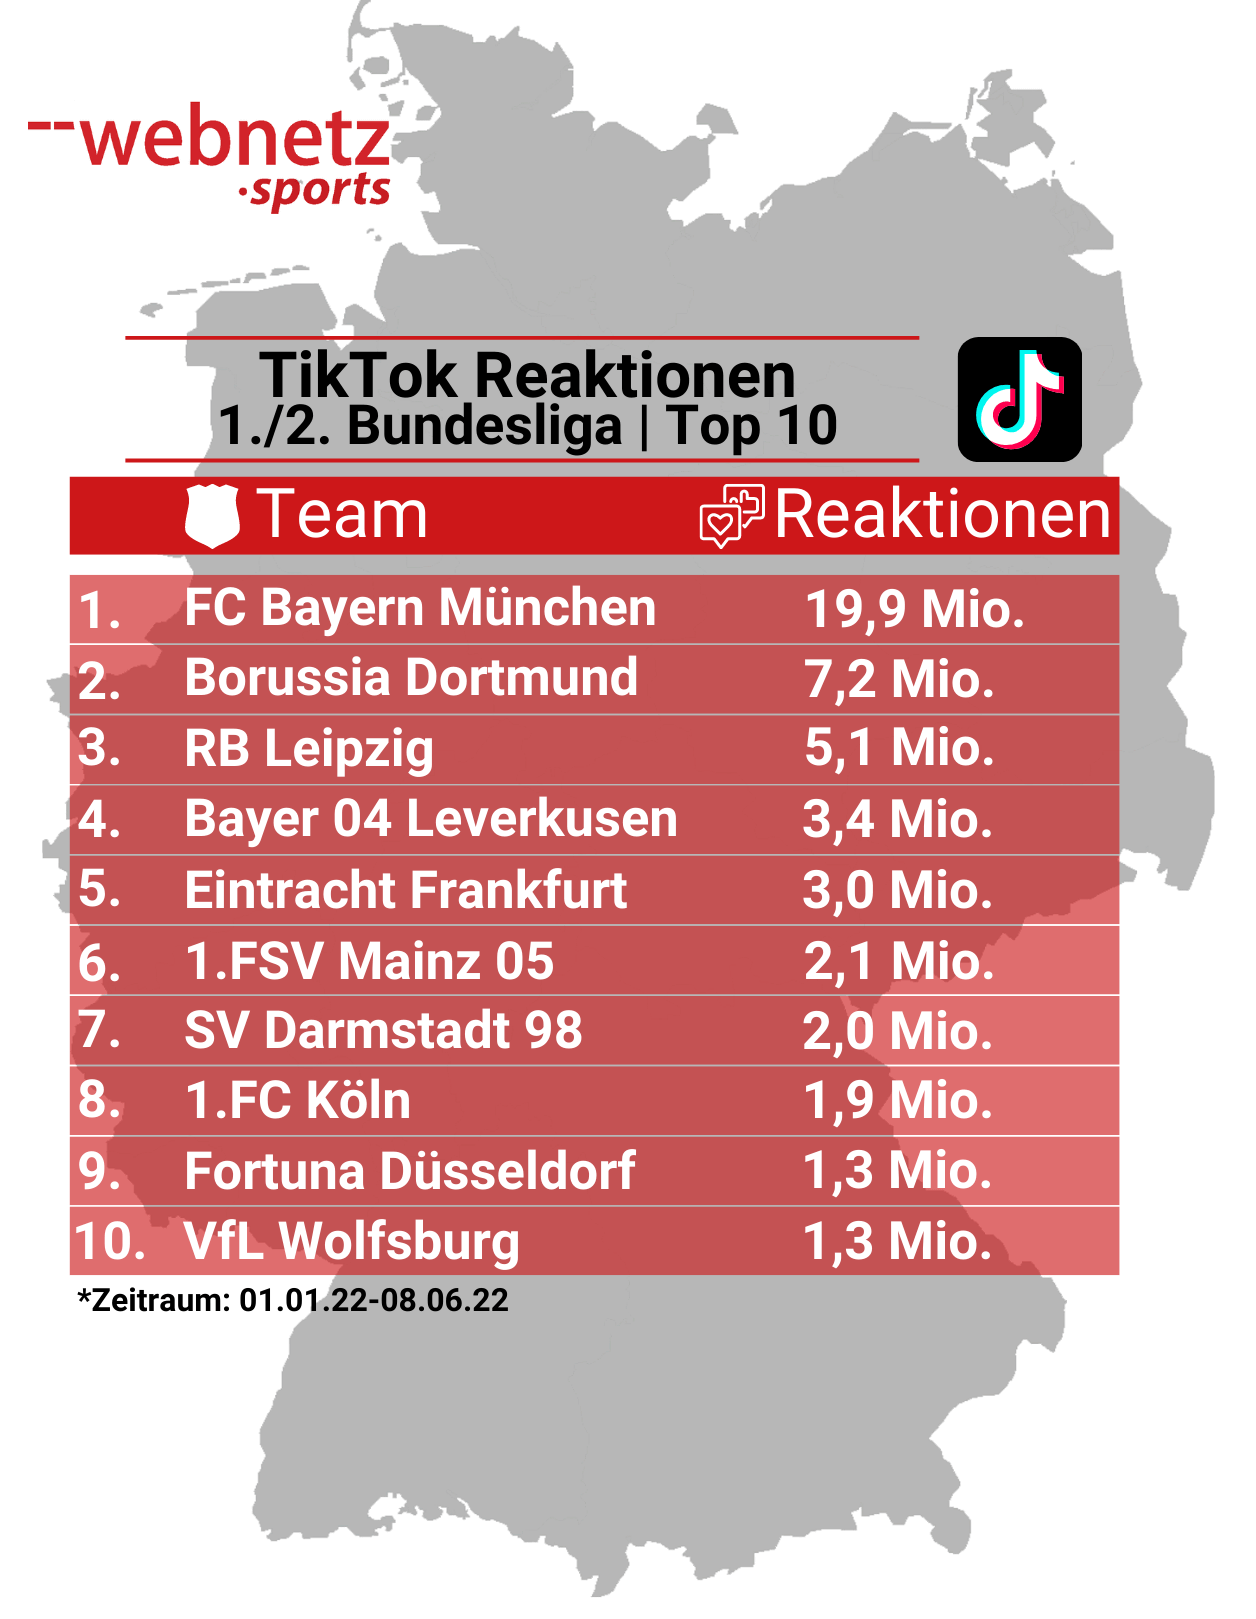 TikTok Top 10 Reaktionen Bundesliga